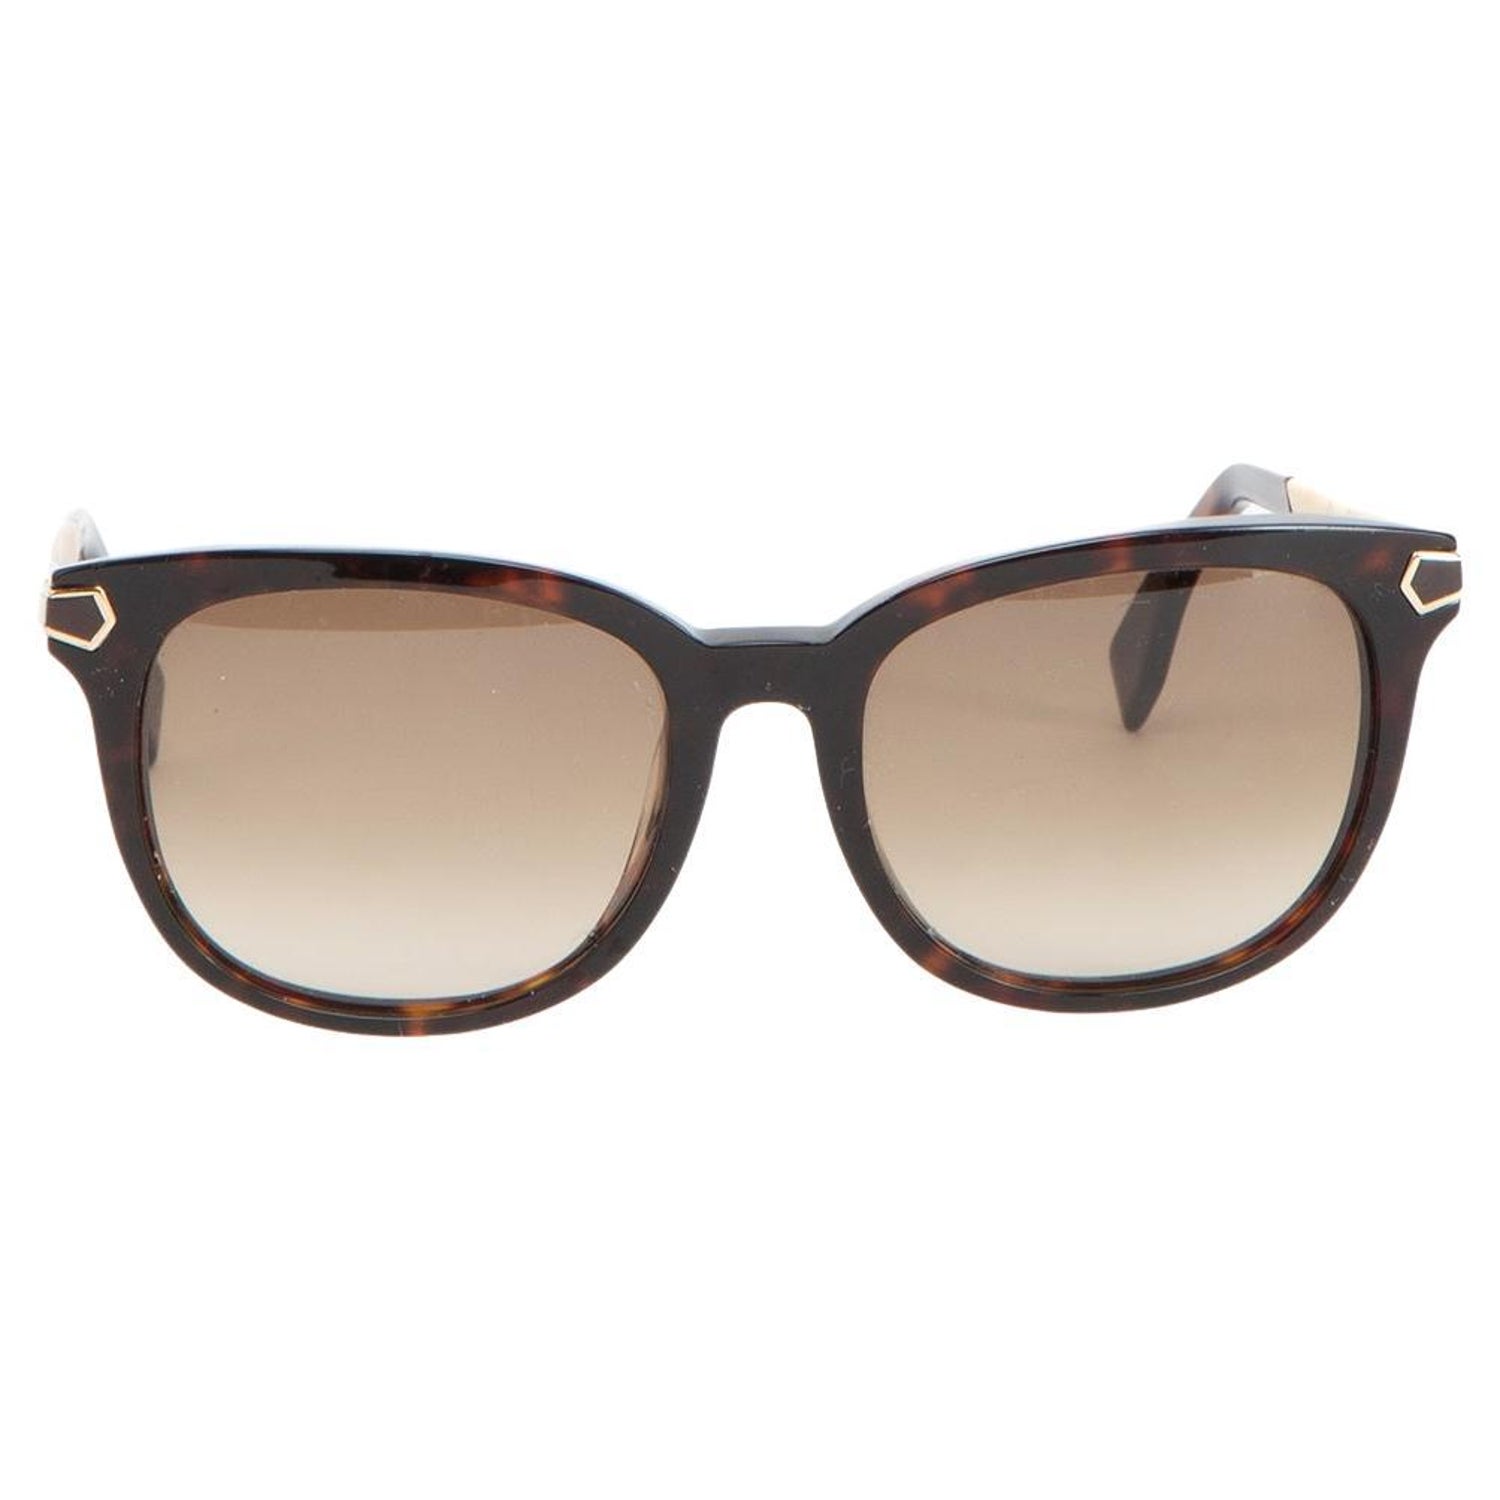 Chanel Tortoiseshell Sunglasses - For Sale on 1stDibs